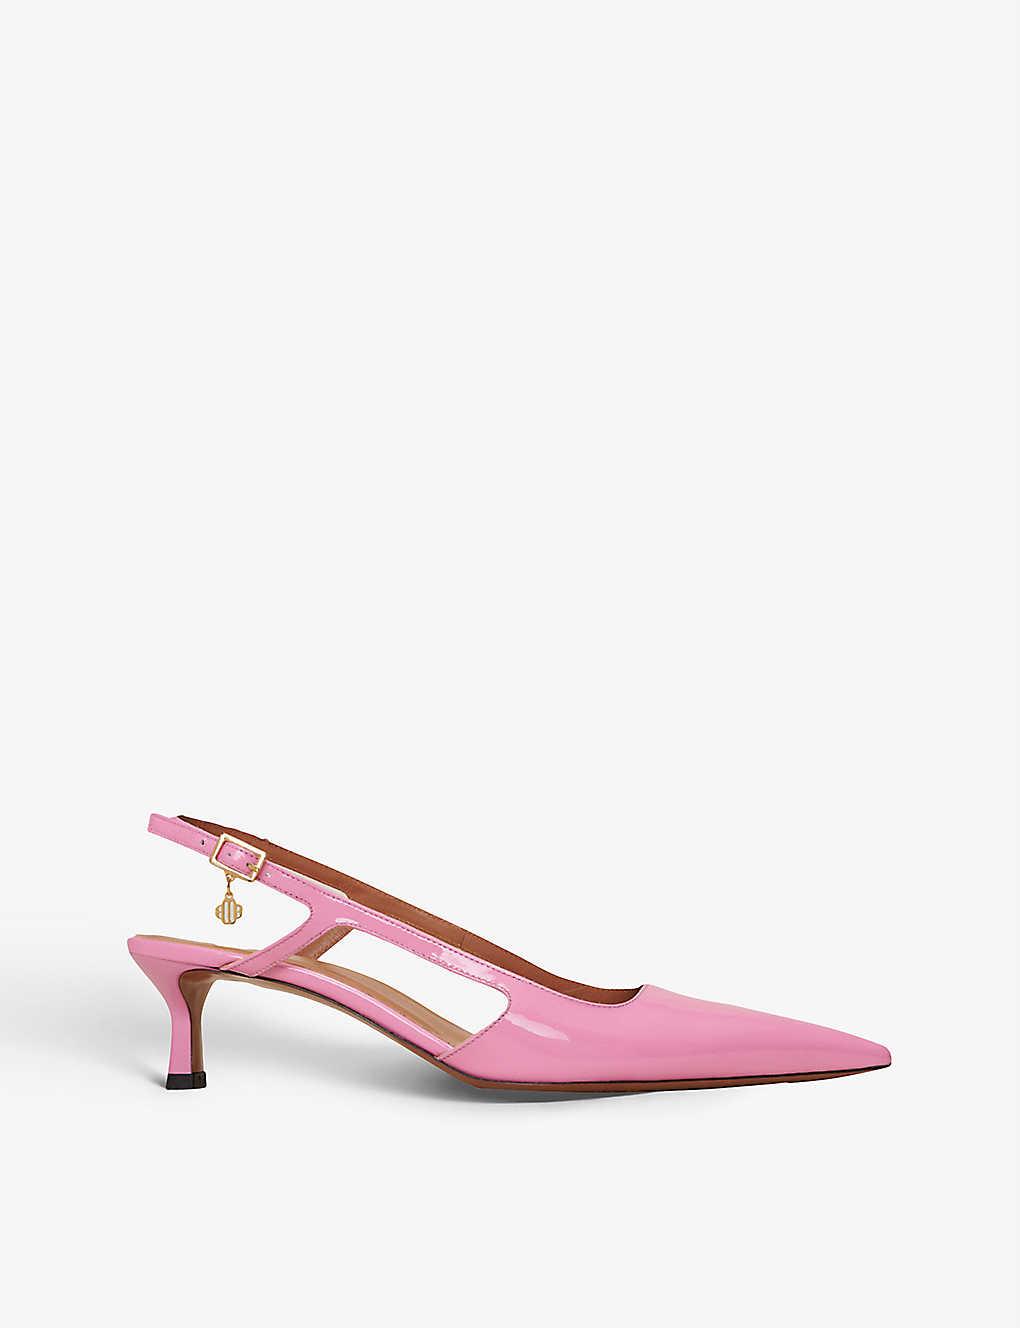 Maje Fayna Patent-leather Kitten Heels in Pink | Lyst